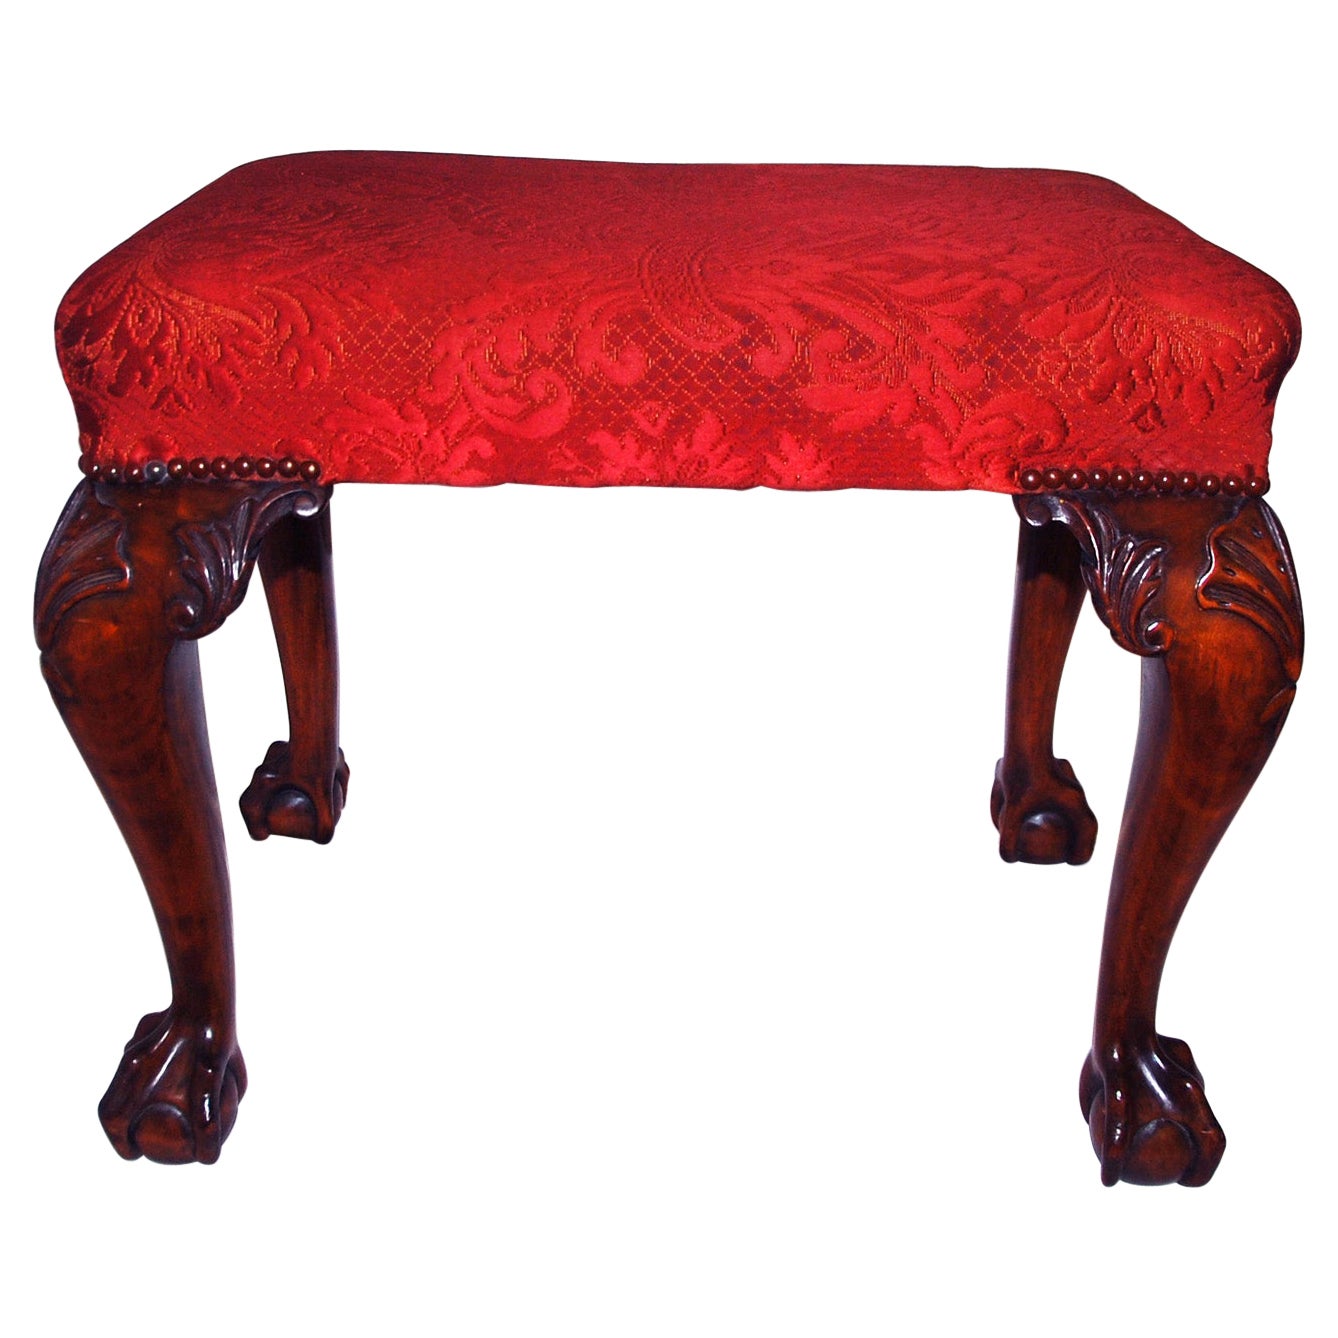 English 19th Century Chippendale Style Mahogany Upholstered Stool